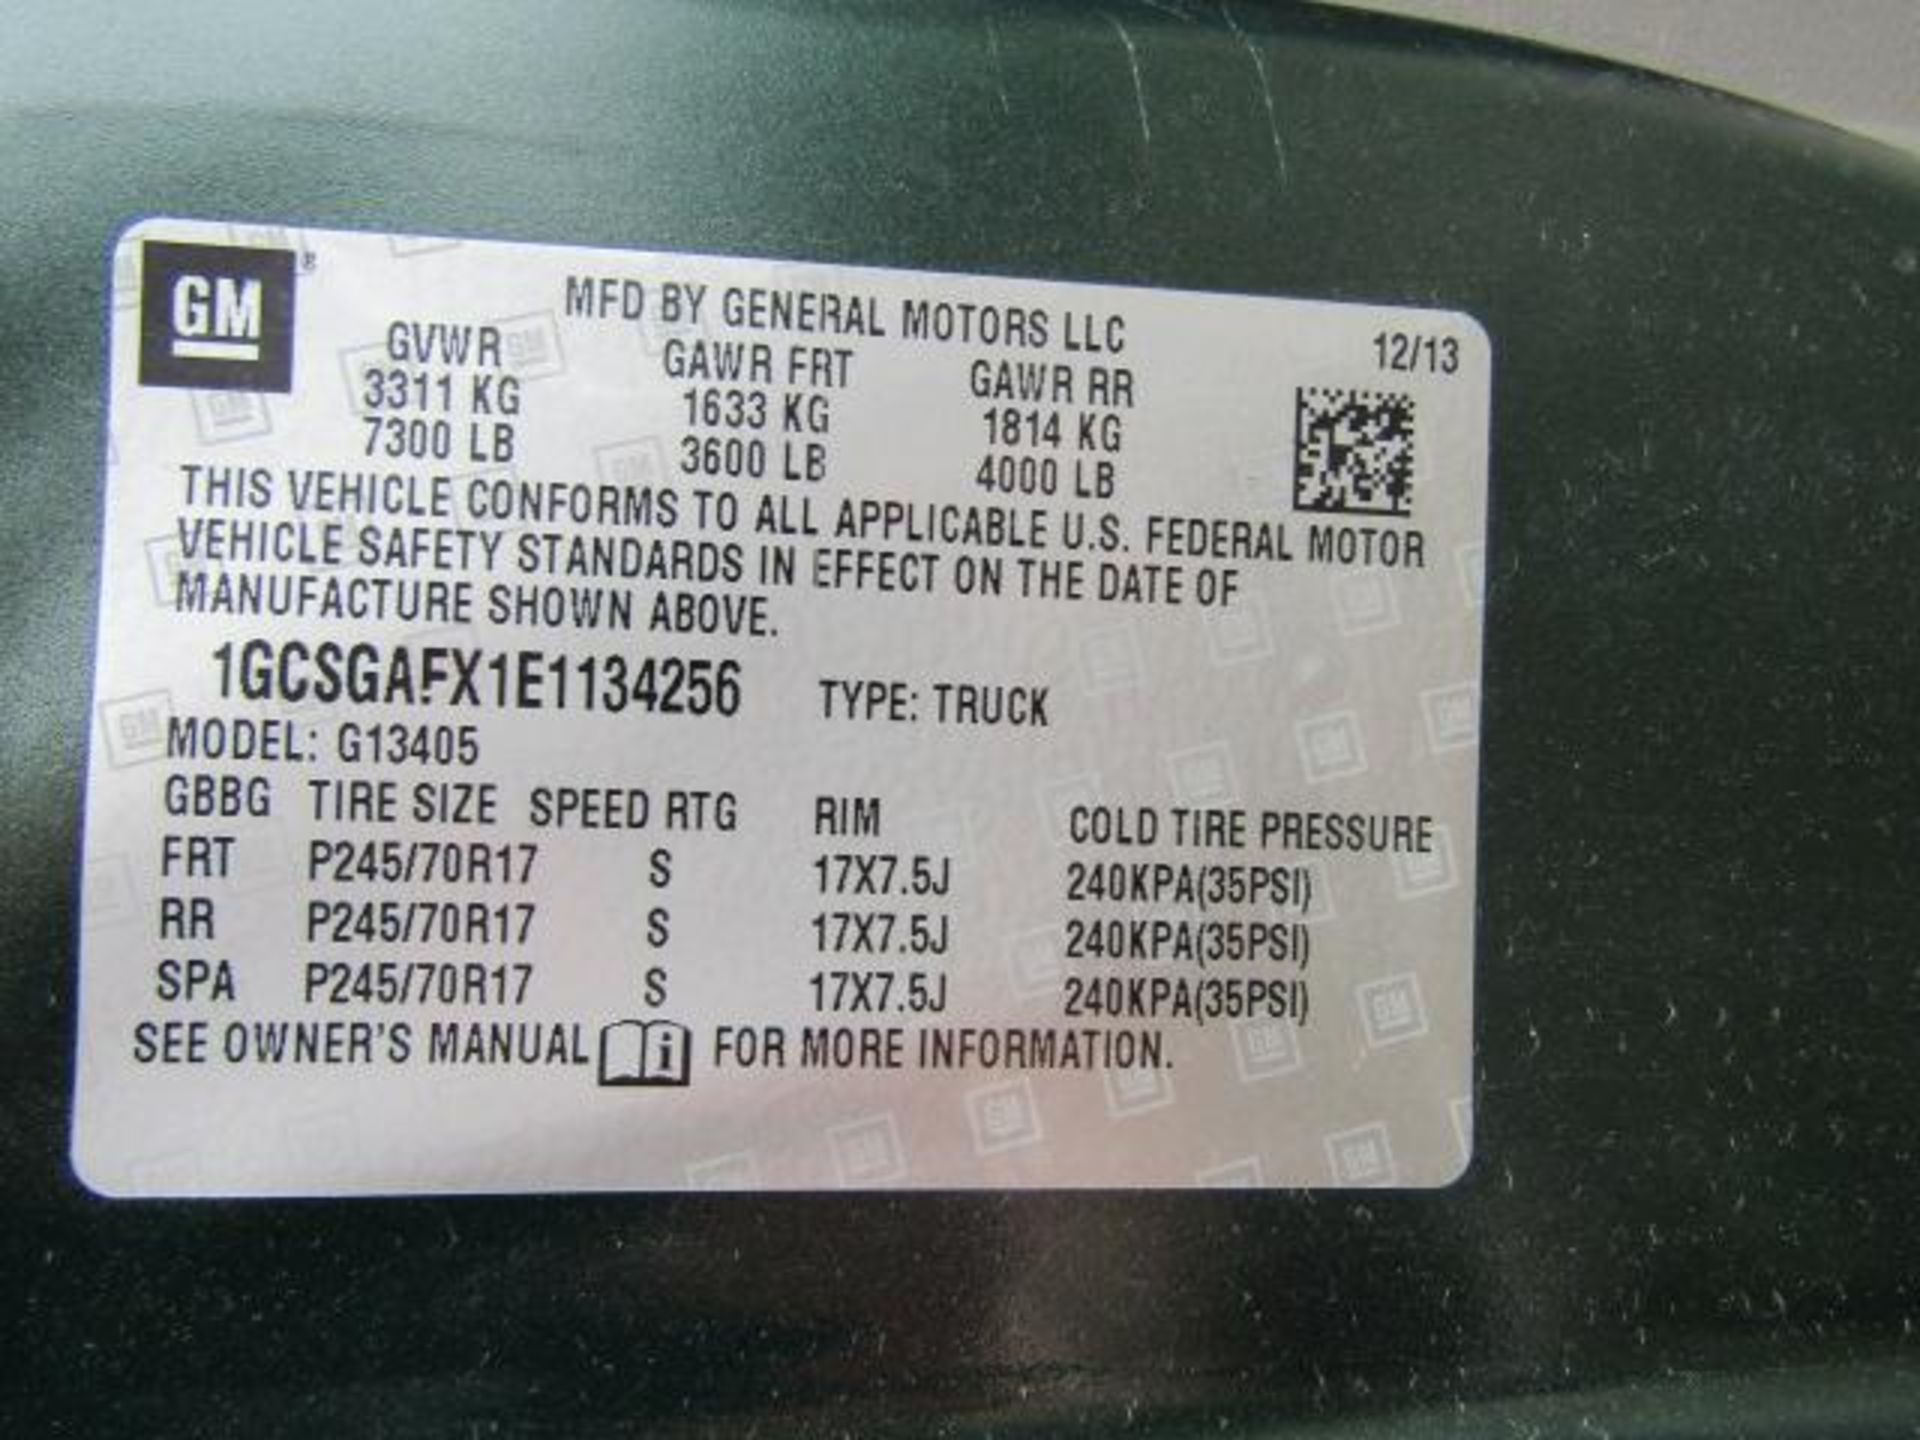 2014 Chevrolet Express Van Model G13405, VIN 1GCSGAFX1E1134256, Rubber Mats, Front Seat Partition to - Image 12 of 14